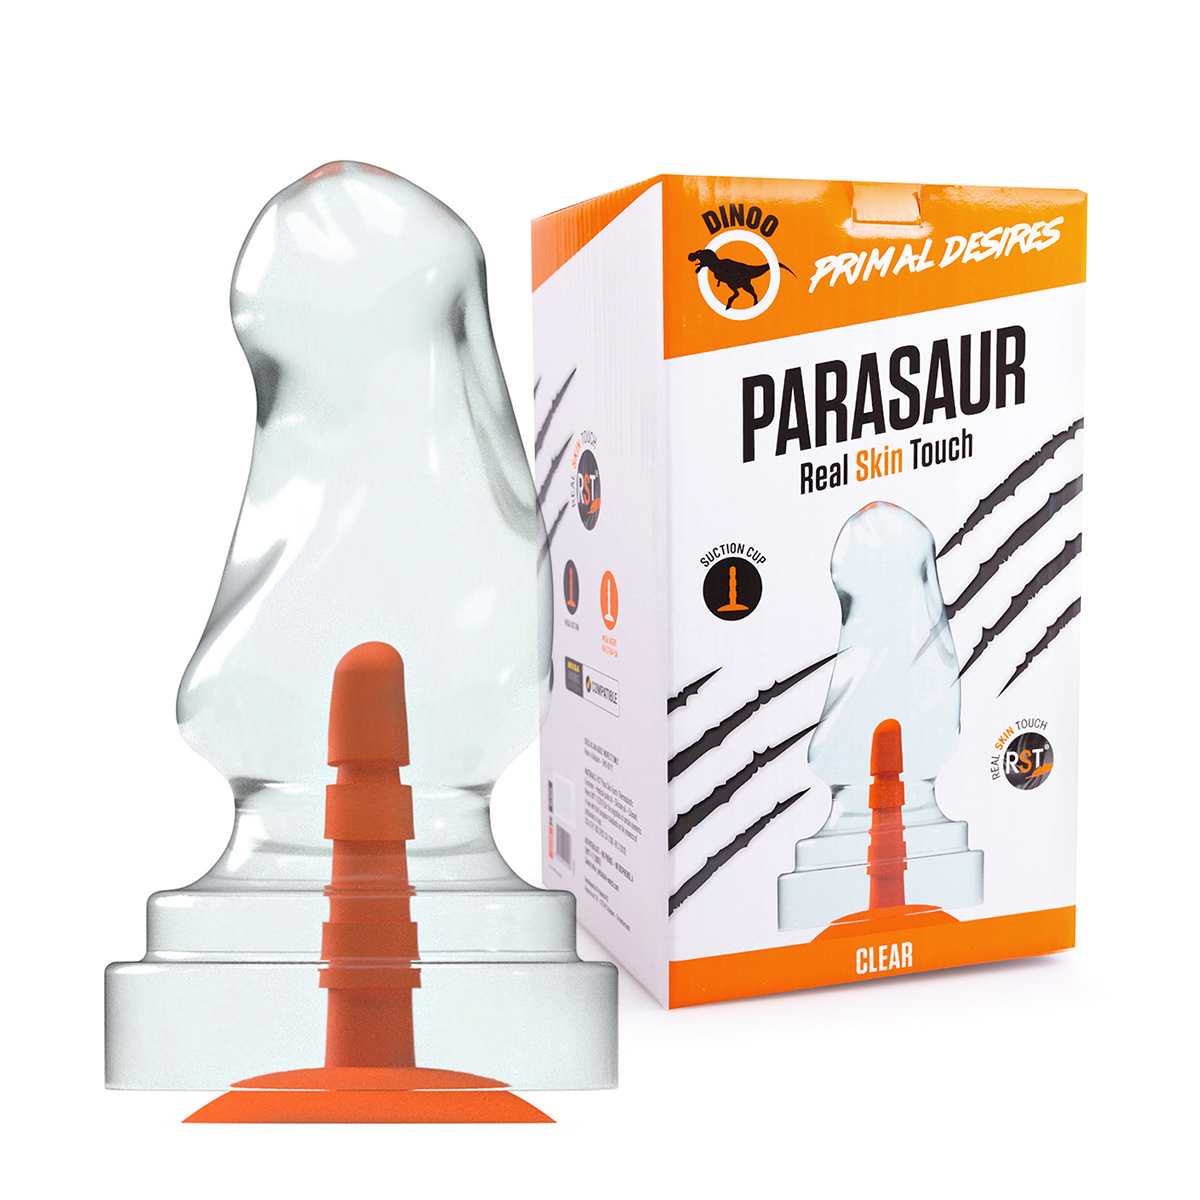 Dinoo Primal – Parasaur Clear